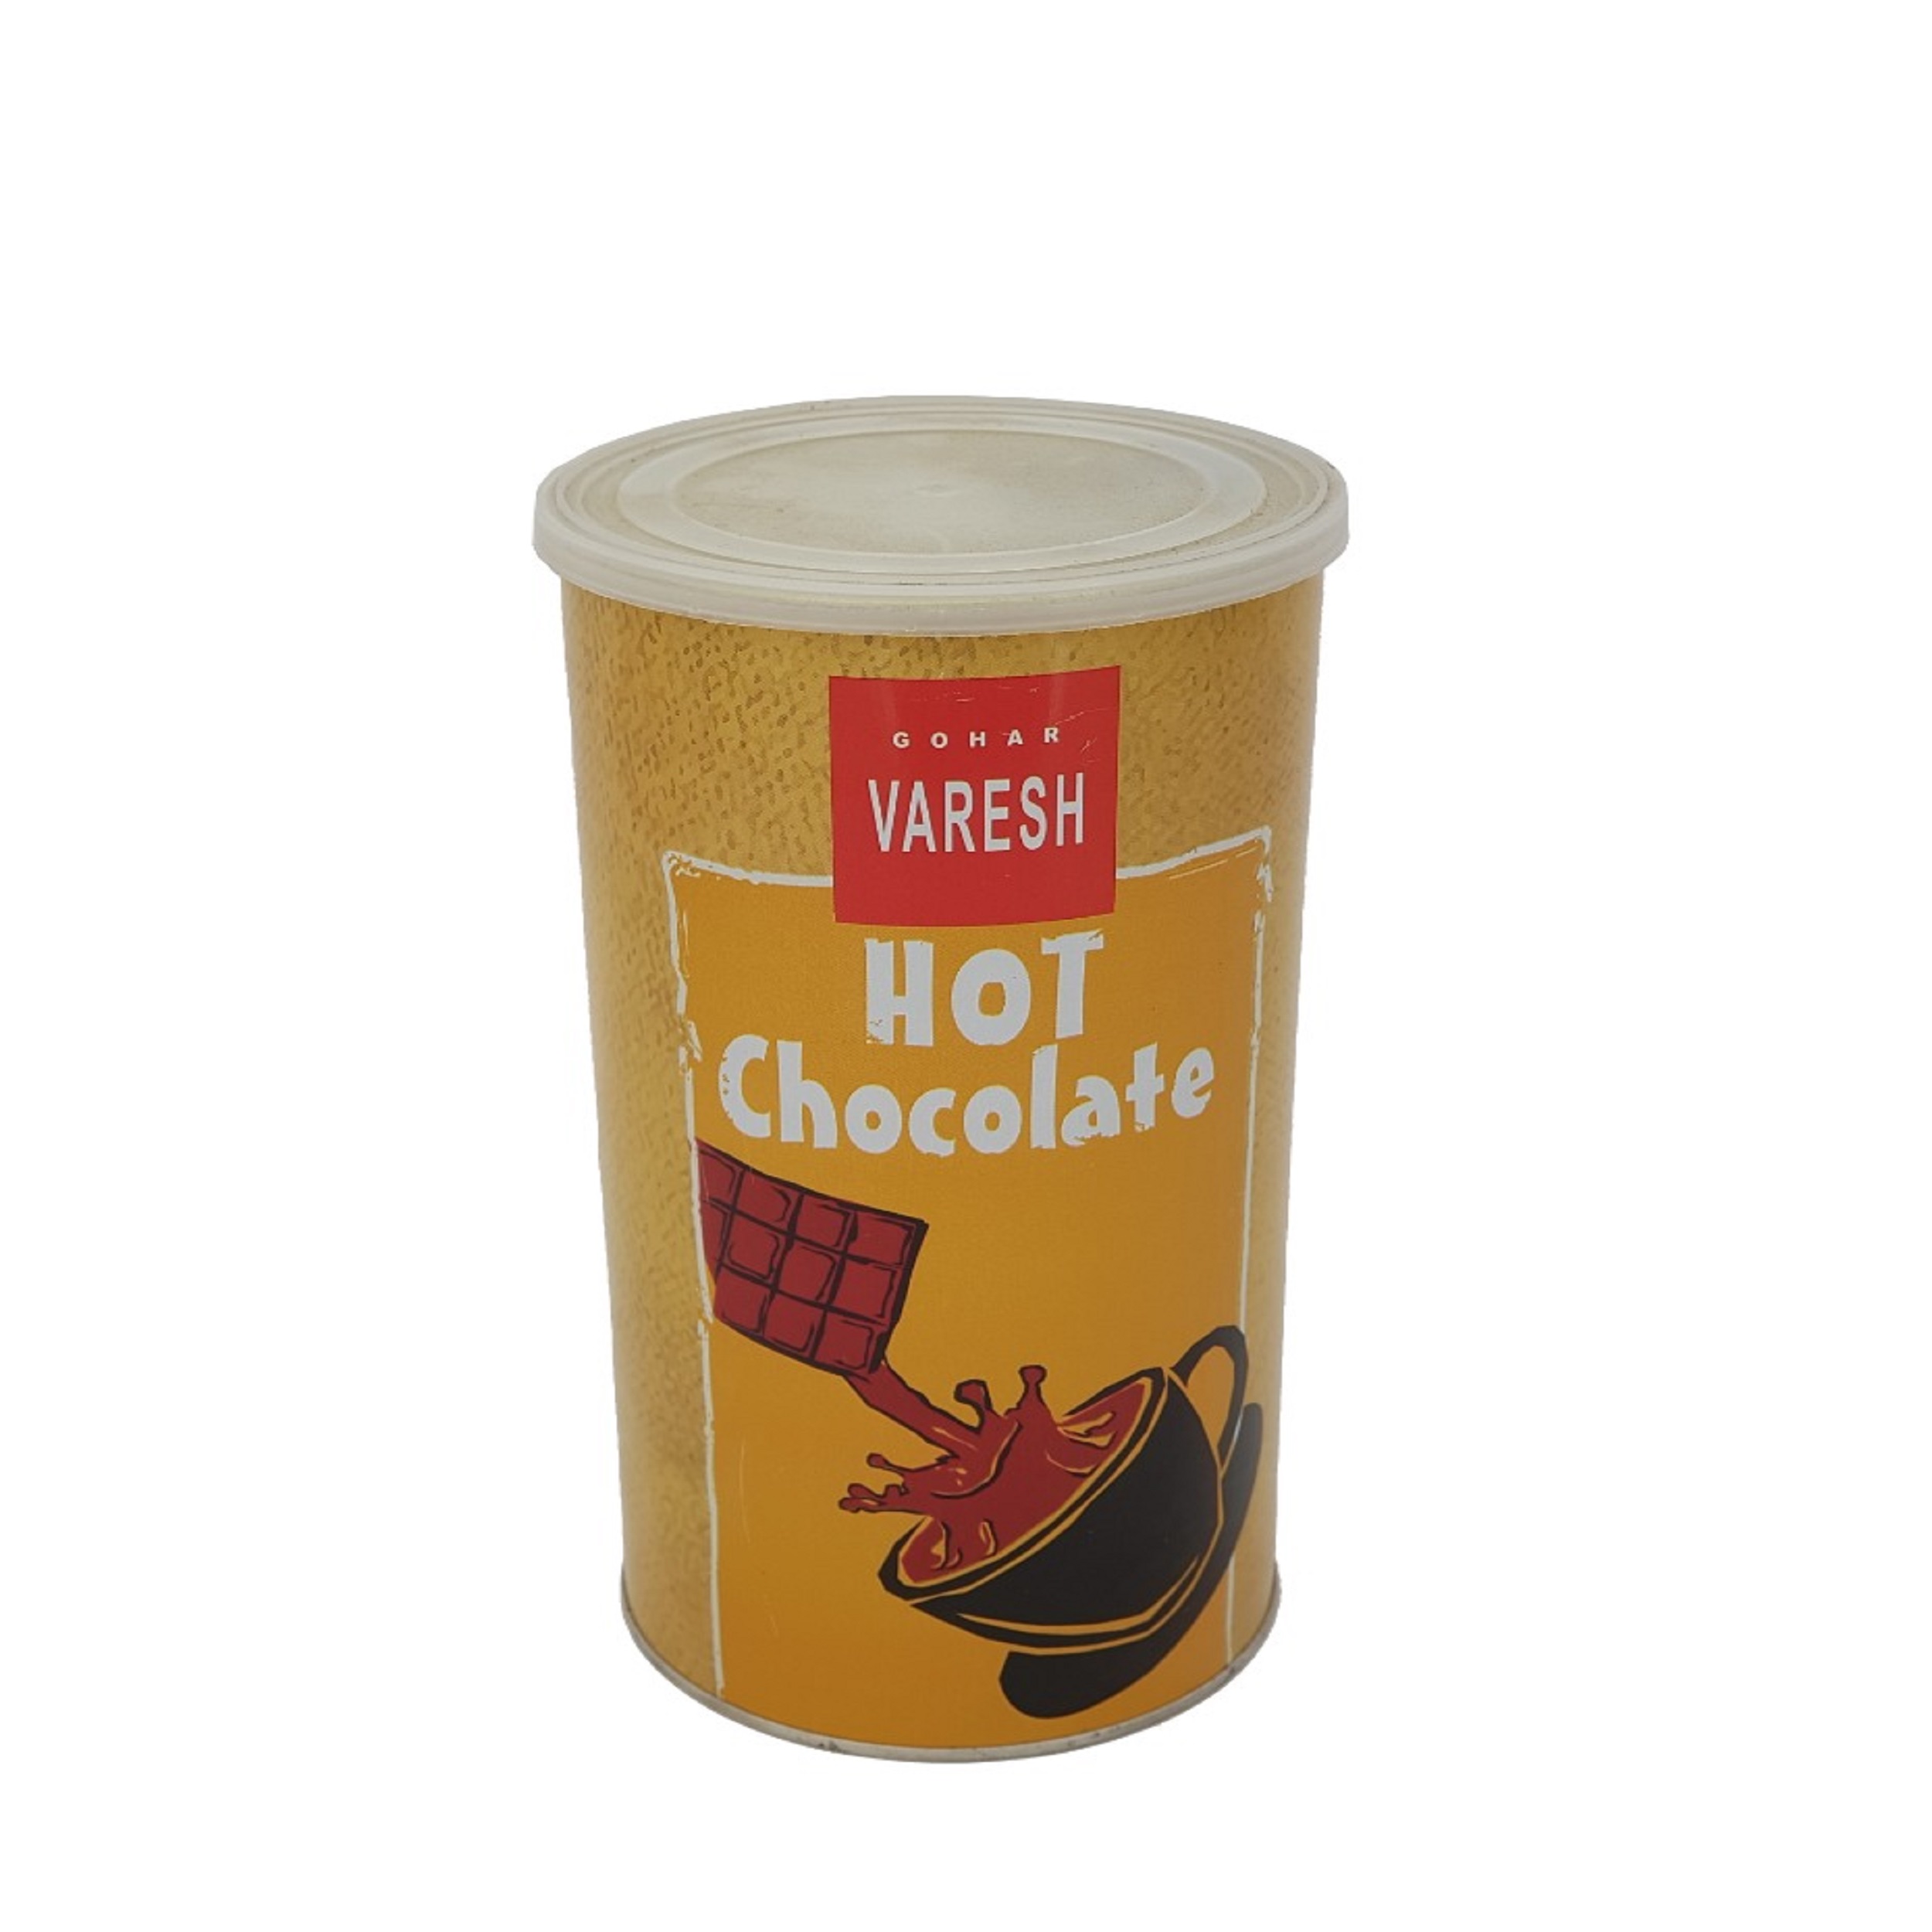 پودر شکلات داغ گوهر و ارش - 1 کیلوگرم